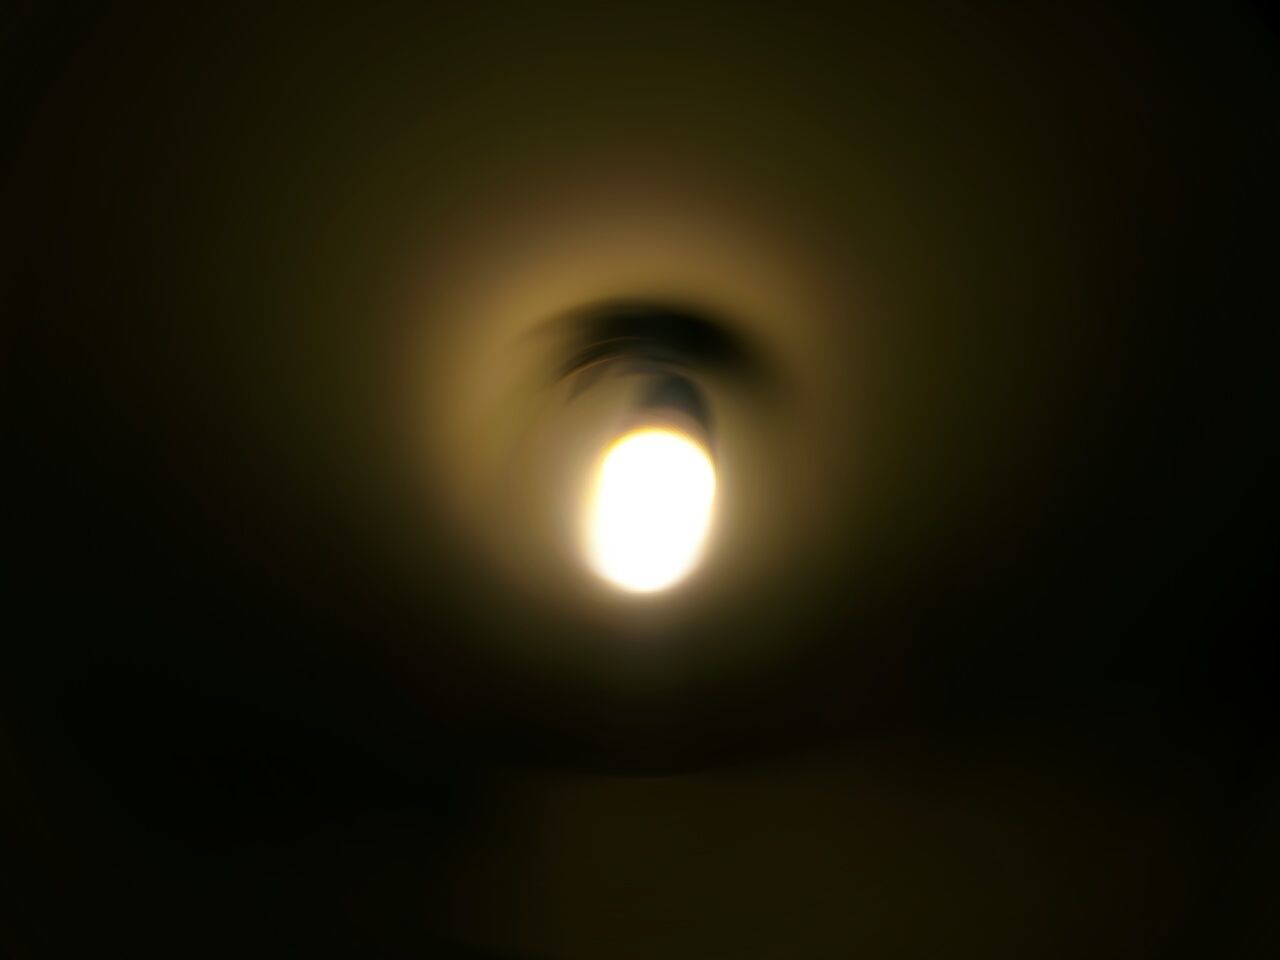 Low angle view of defocused illuminated light bulb